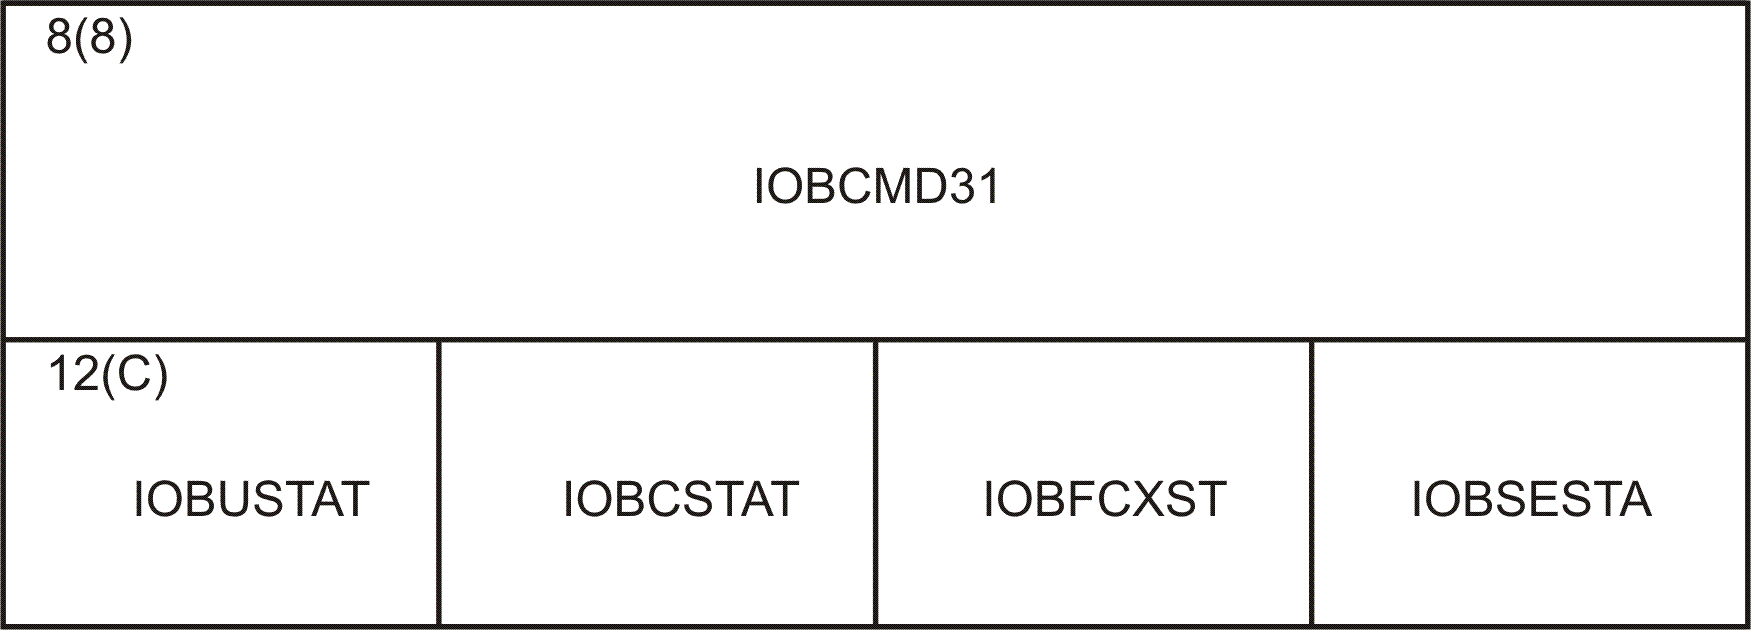 IIOBFLAG3 and IOBCSW fields for zHPF channel program